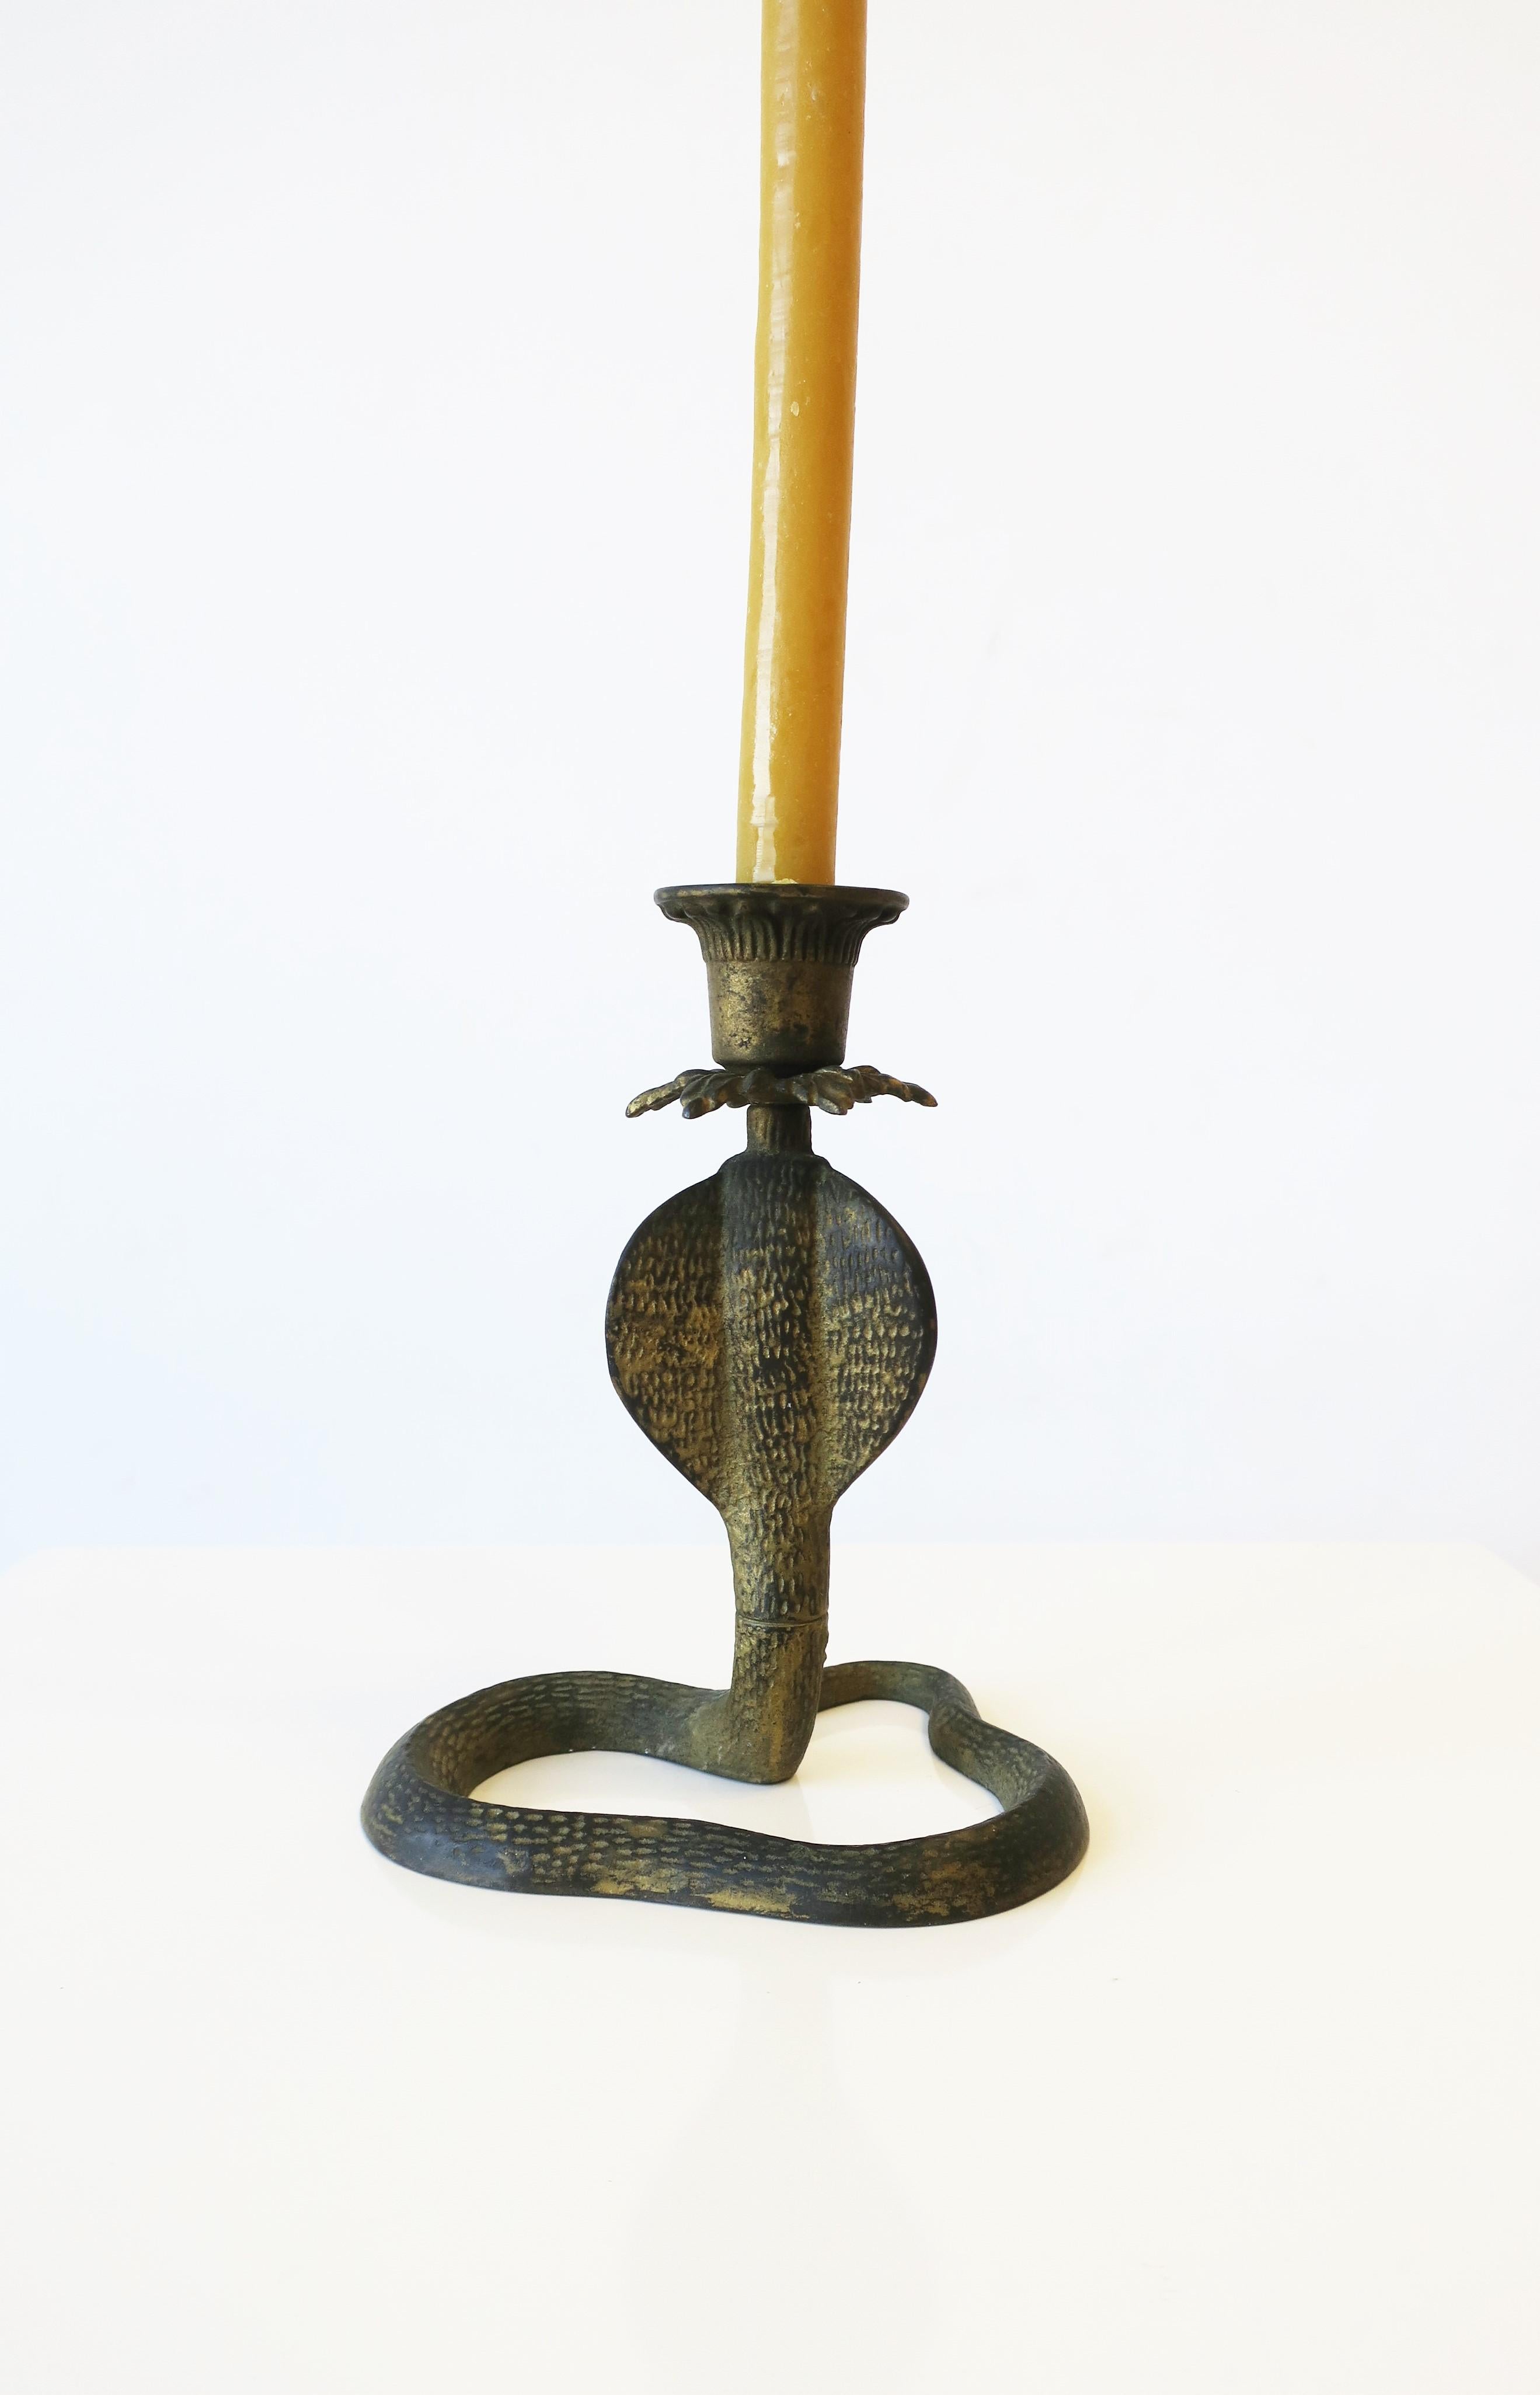 Cobra Snake Candlestick Holder in Gold Gilt For Sale 5